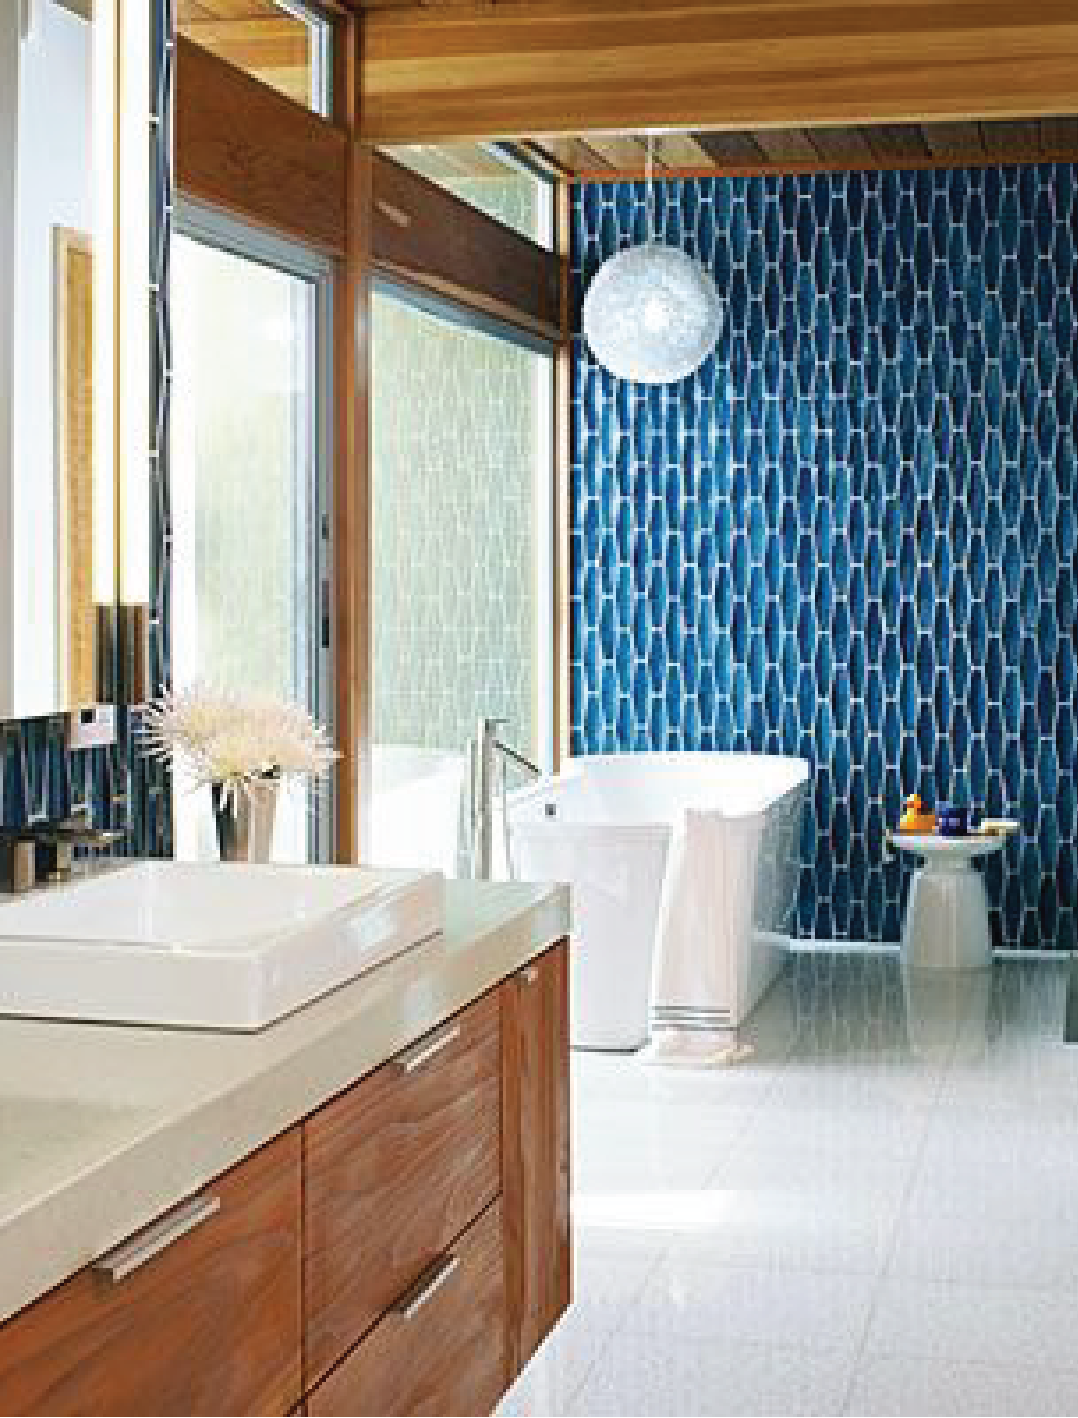 6 Bathroom Tile Design Inspirations For A Modern Look